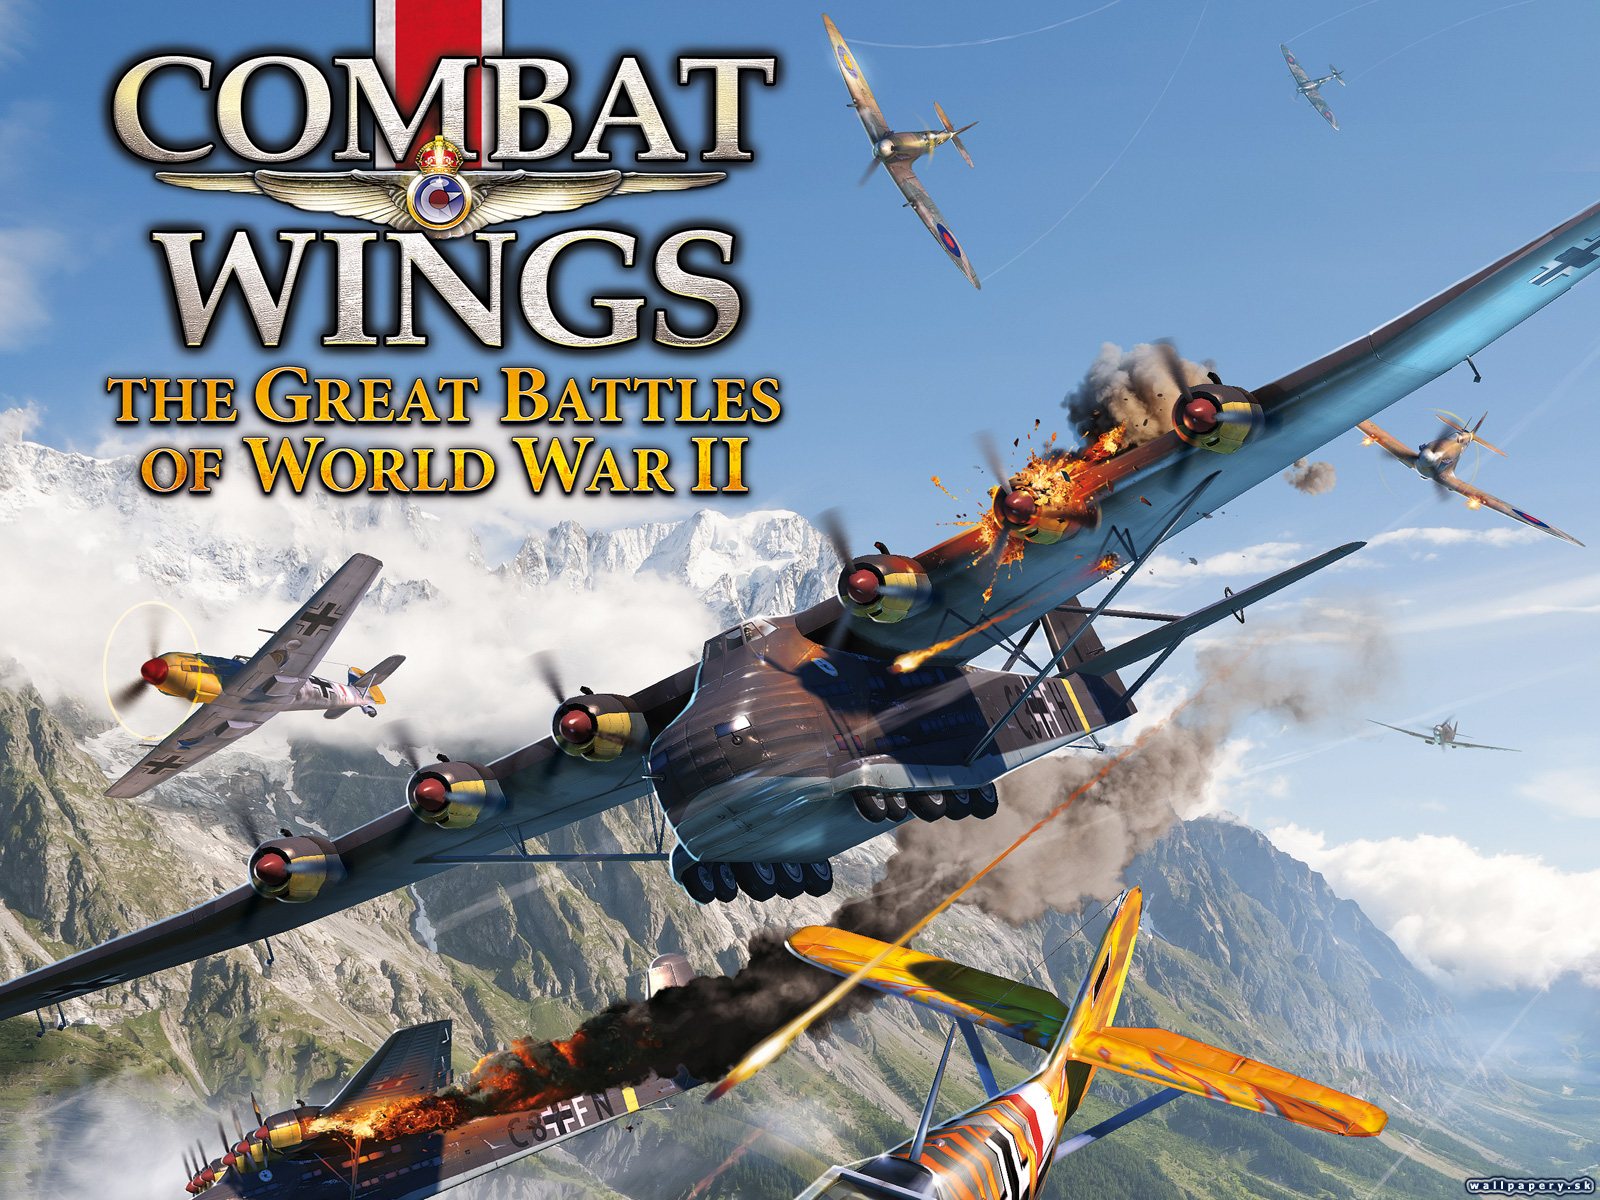 Combat Wings #17